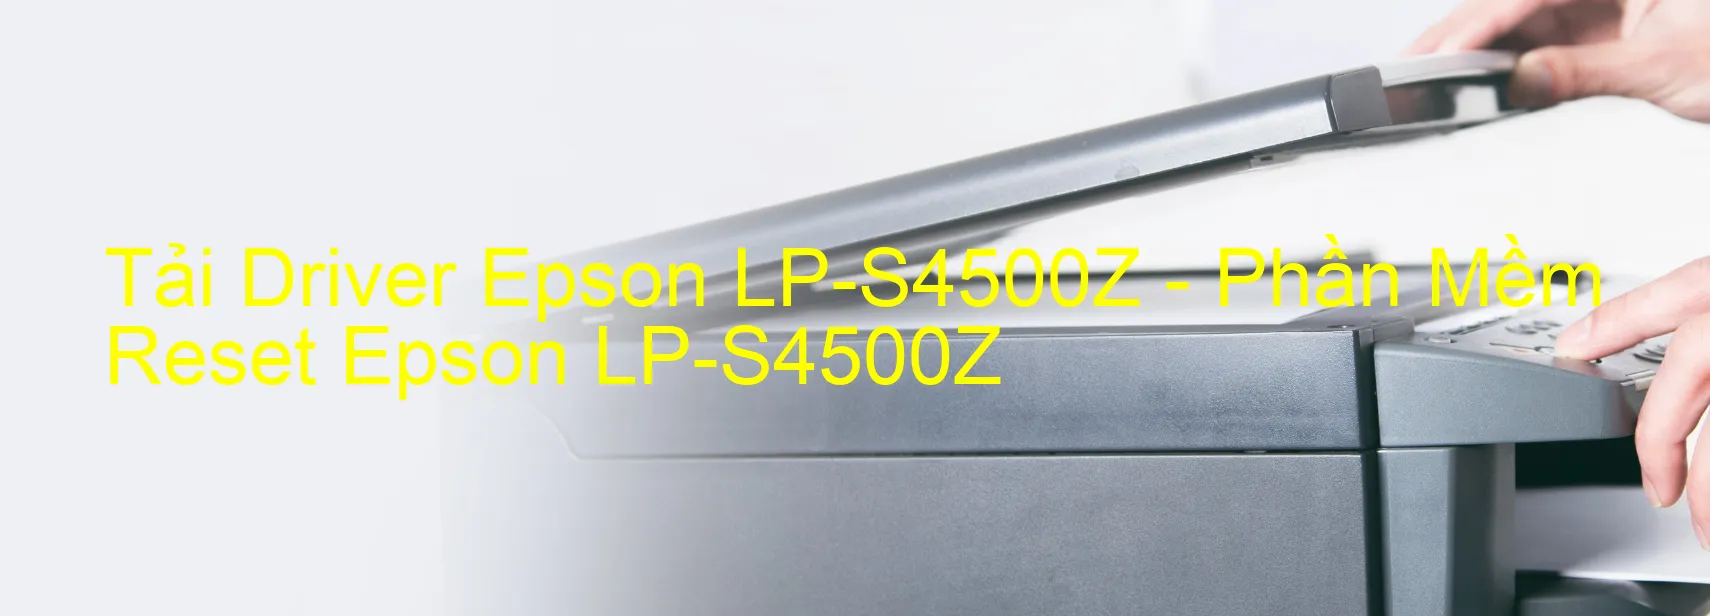 Driver Epson LP-S4500Z, Phần Mềm Reset Epson LP-S4500Z